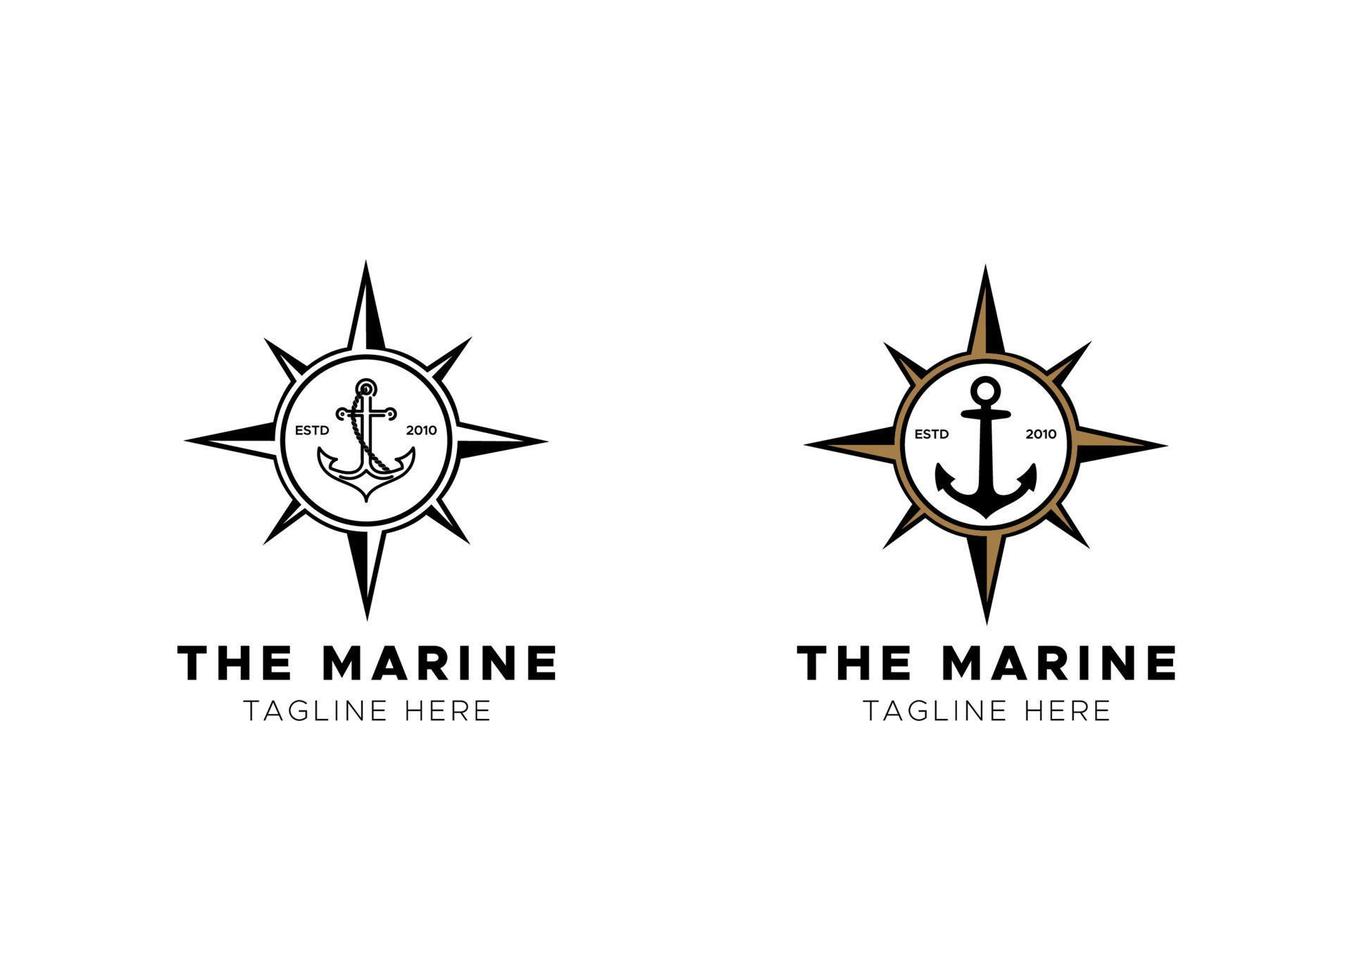 marinier retro emblemen logo met anker, anker logo vector